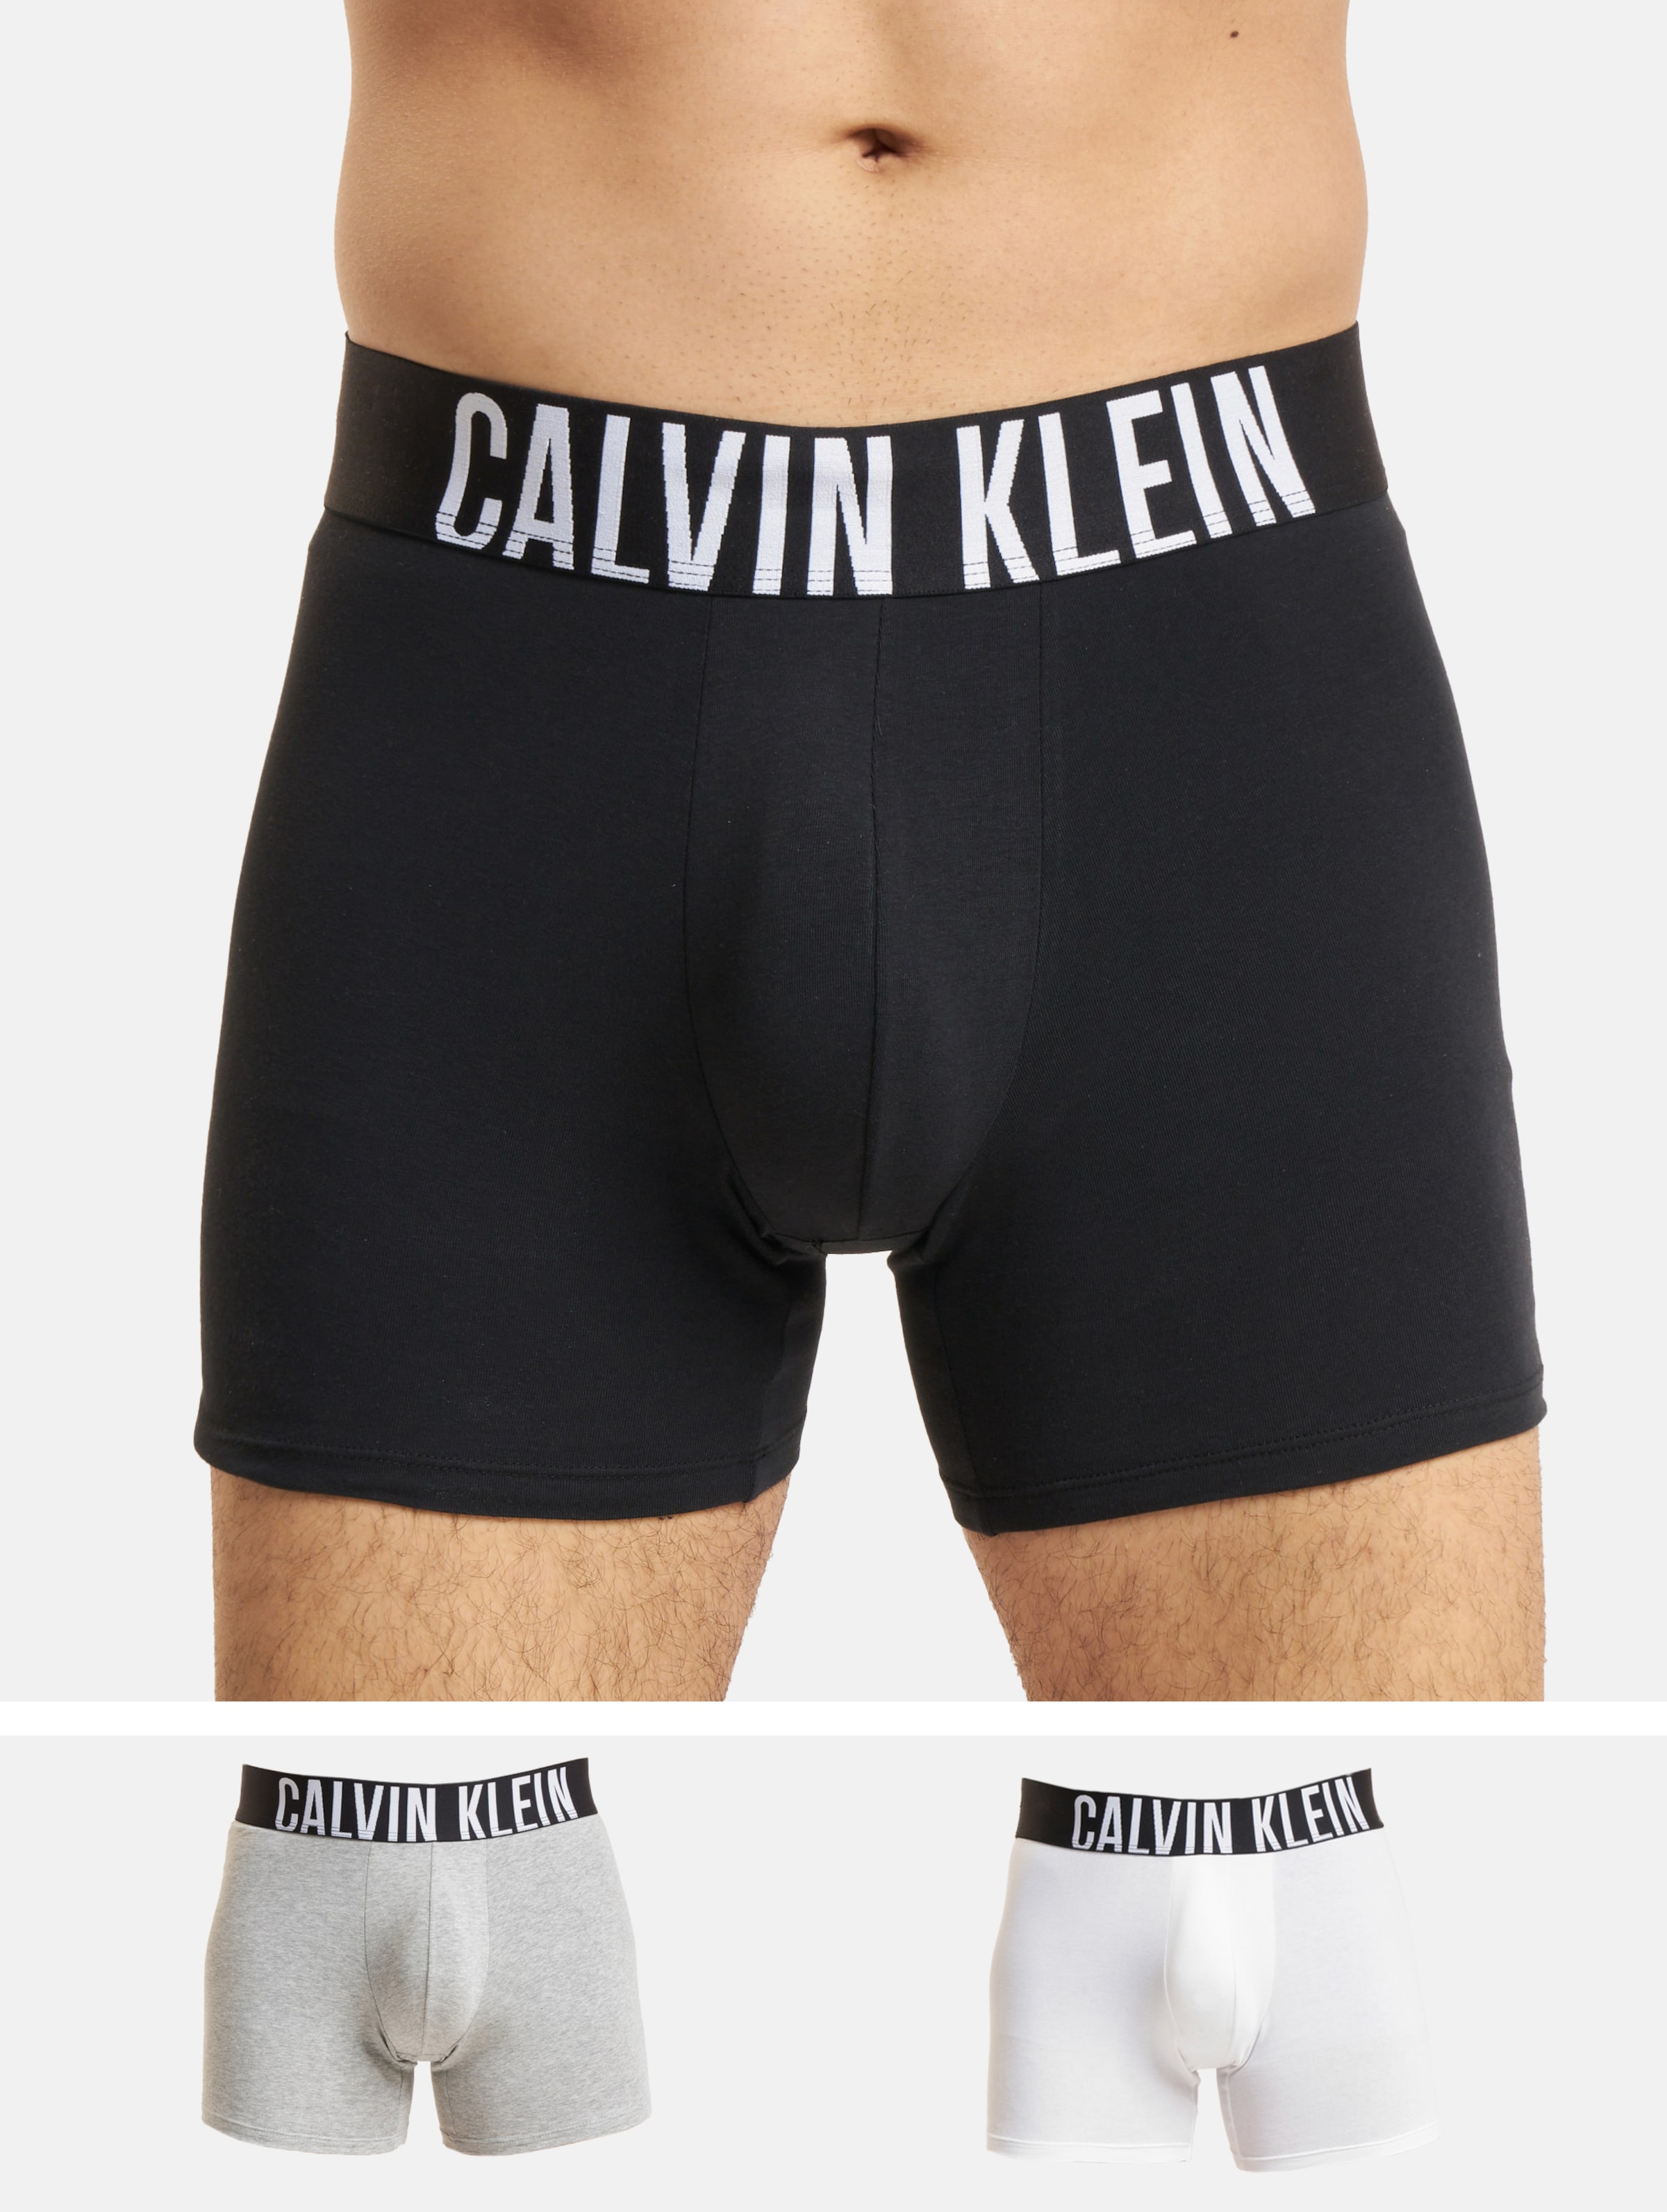 Calvin Klein Brief 3 Pack Boxershorts Männer,Unisex op kleur grijs, Maat XXL